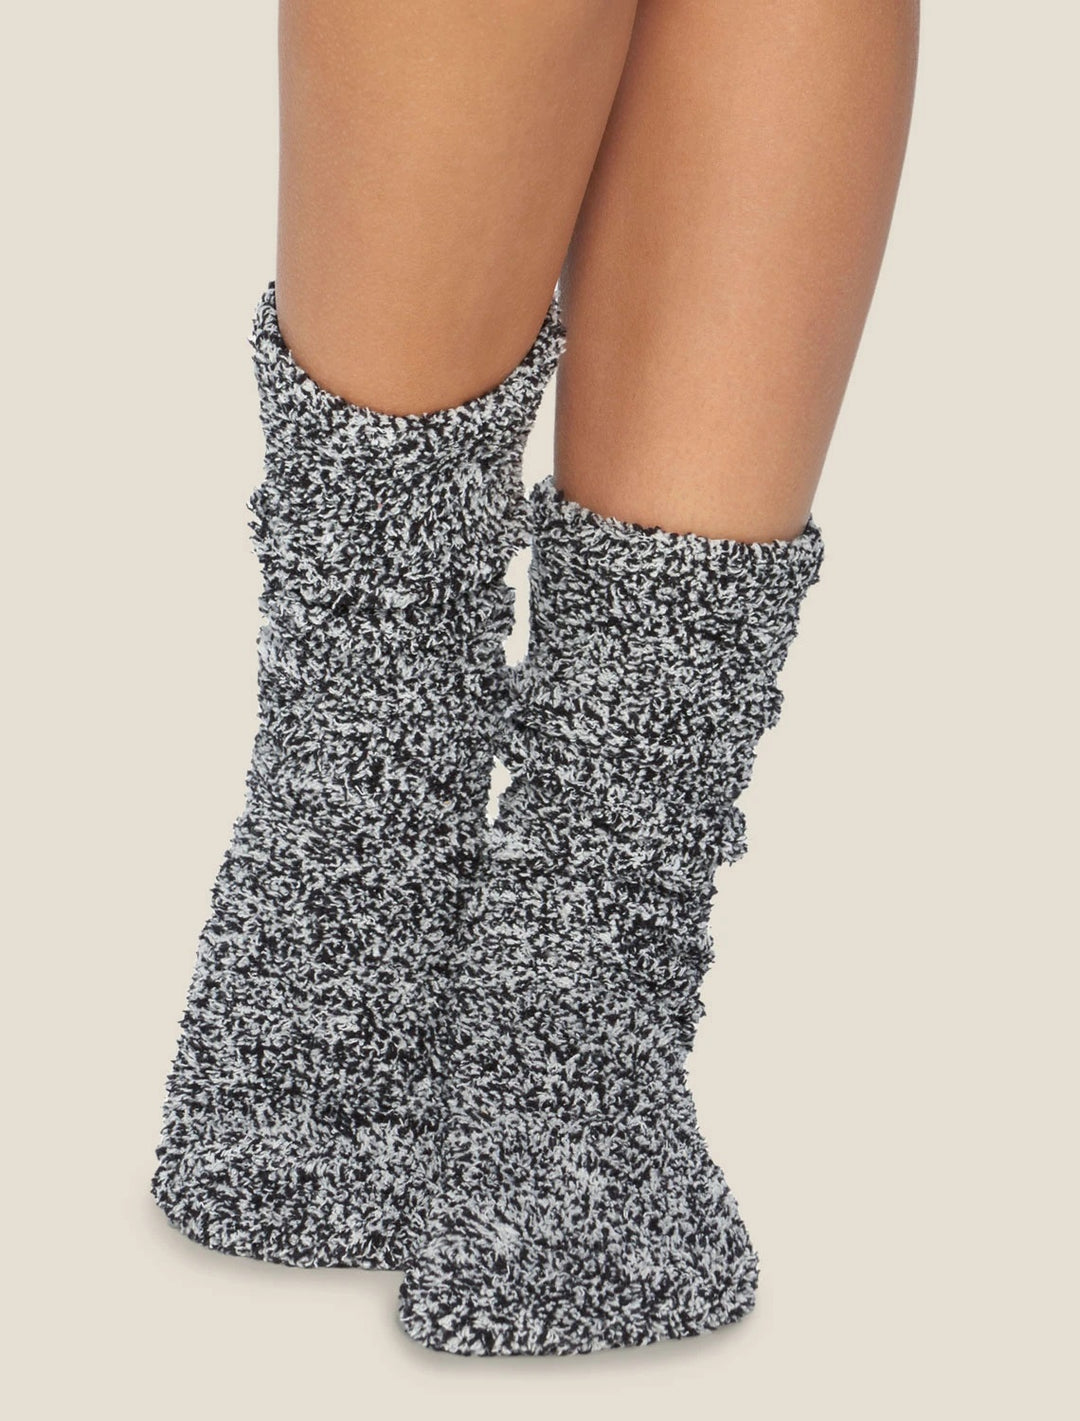 Barefoot Dreams - Cozychic Women's Heathered Socks in Black-White